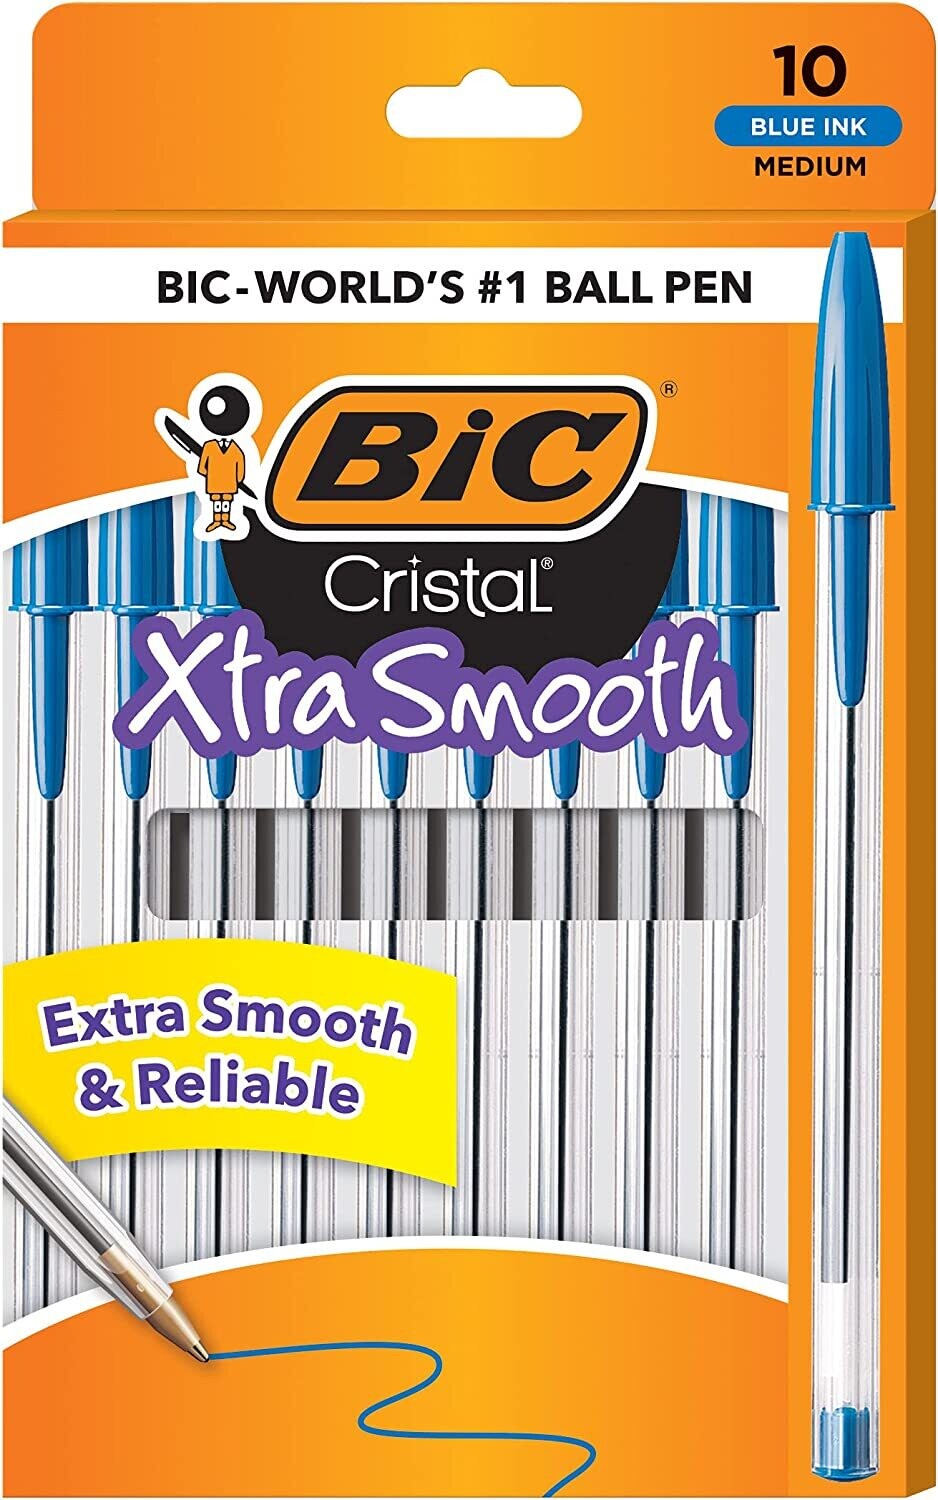 BIC Cristal Xtra Smooth Ballpoint Pen, Medium Point (1.0mm), Blue, 10-Count - USA